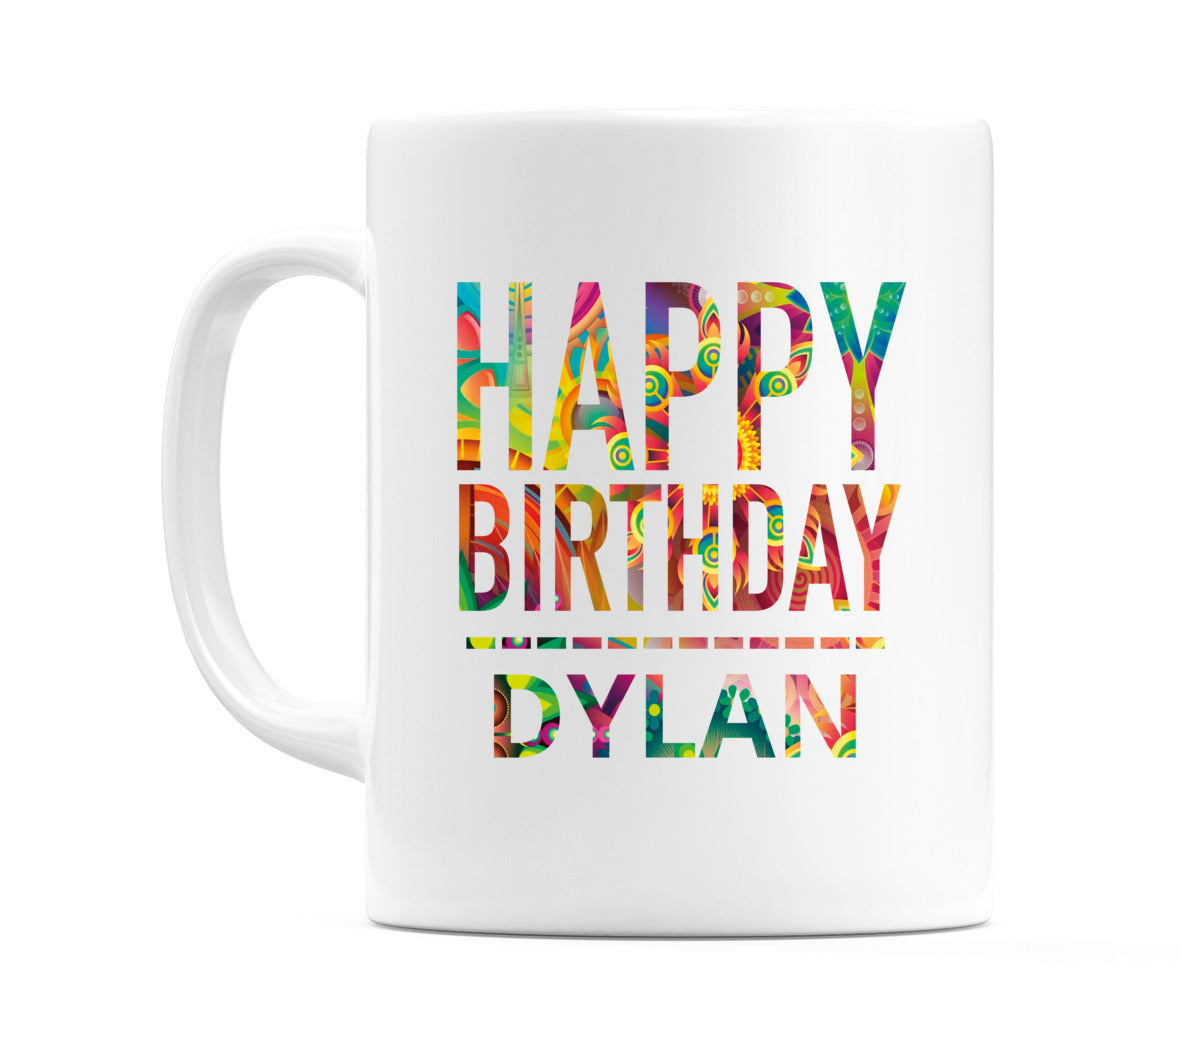 Happy Birthday Dylan (Tie Dye Effect) Mug Cup by WeDoMugs